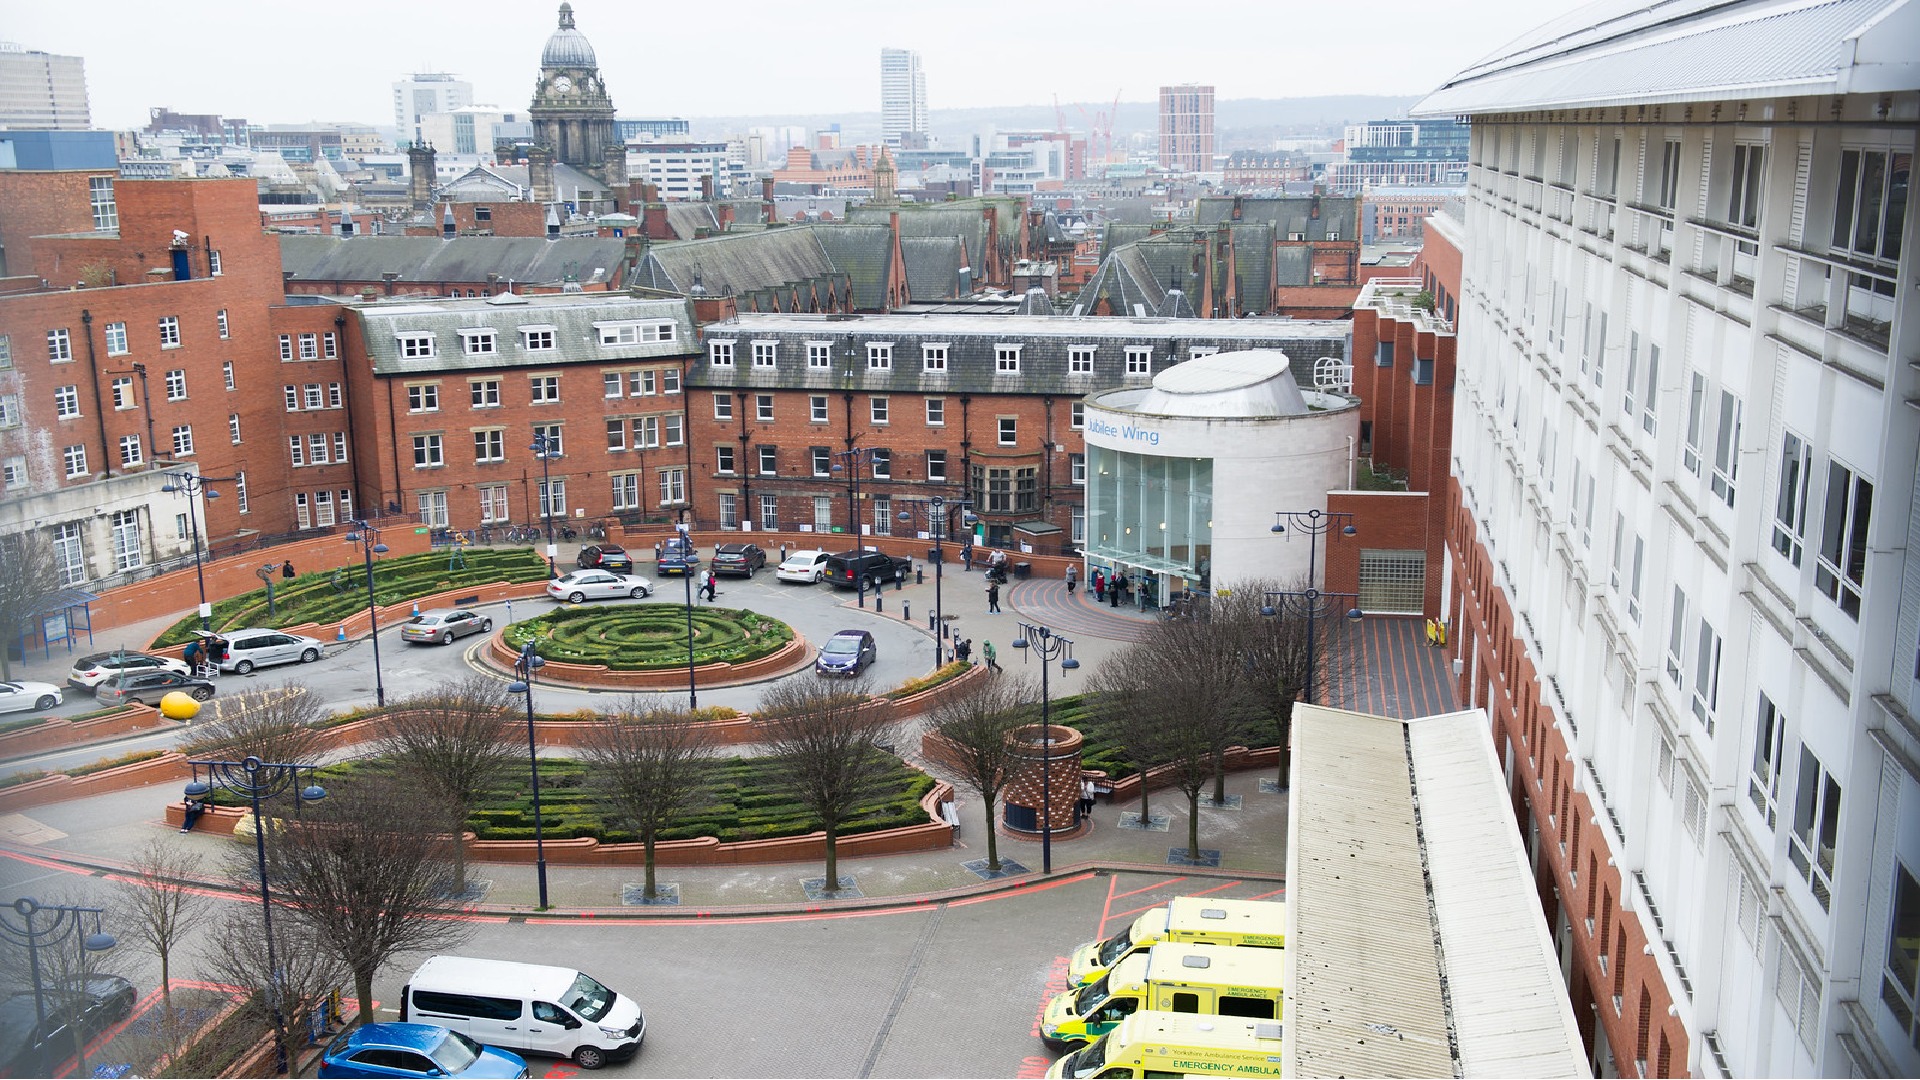 Download image (.jpg) Leeds Teaching Hospitals NHS Trust (opens in a new window)